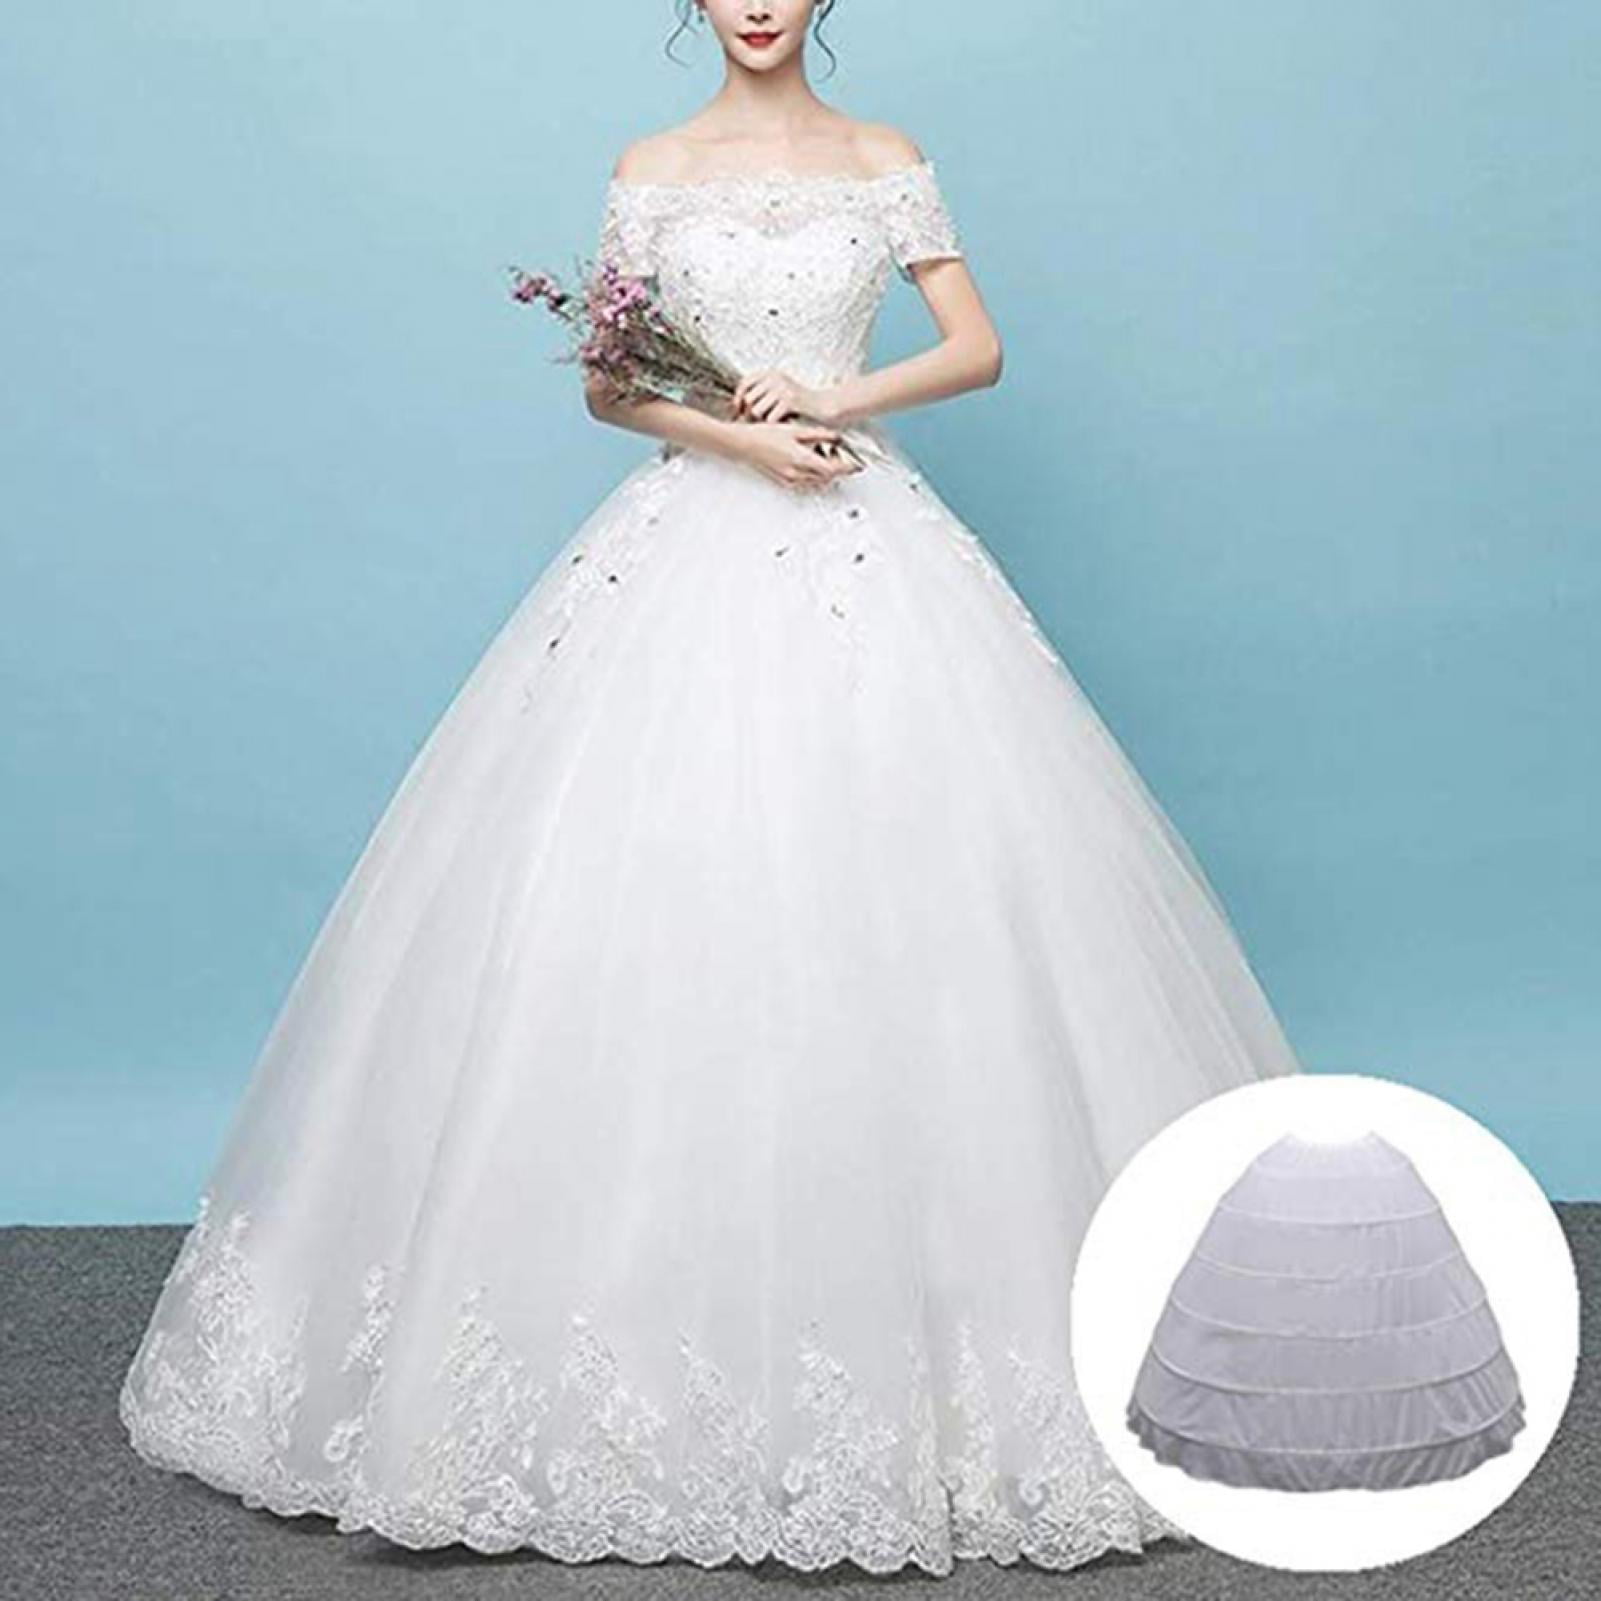 Bridal Hoop Petticoat Crinoline Underskirt Wedding Prom Dress Ball Gown Slips 